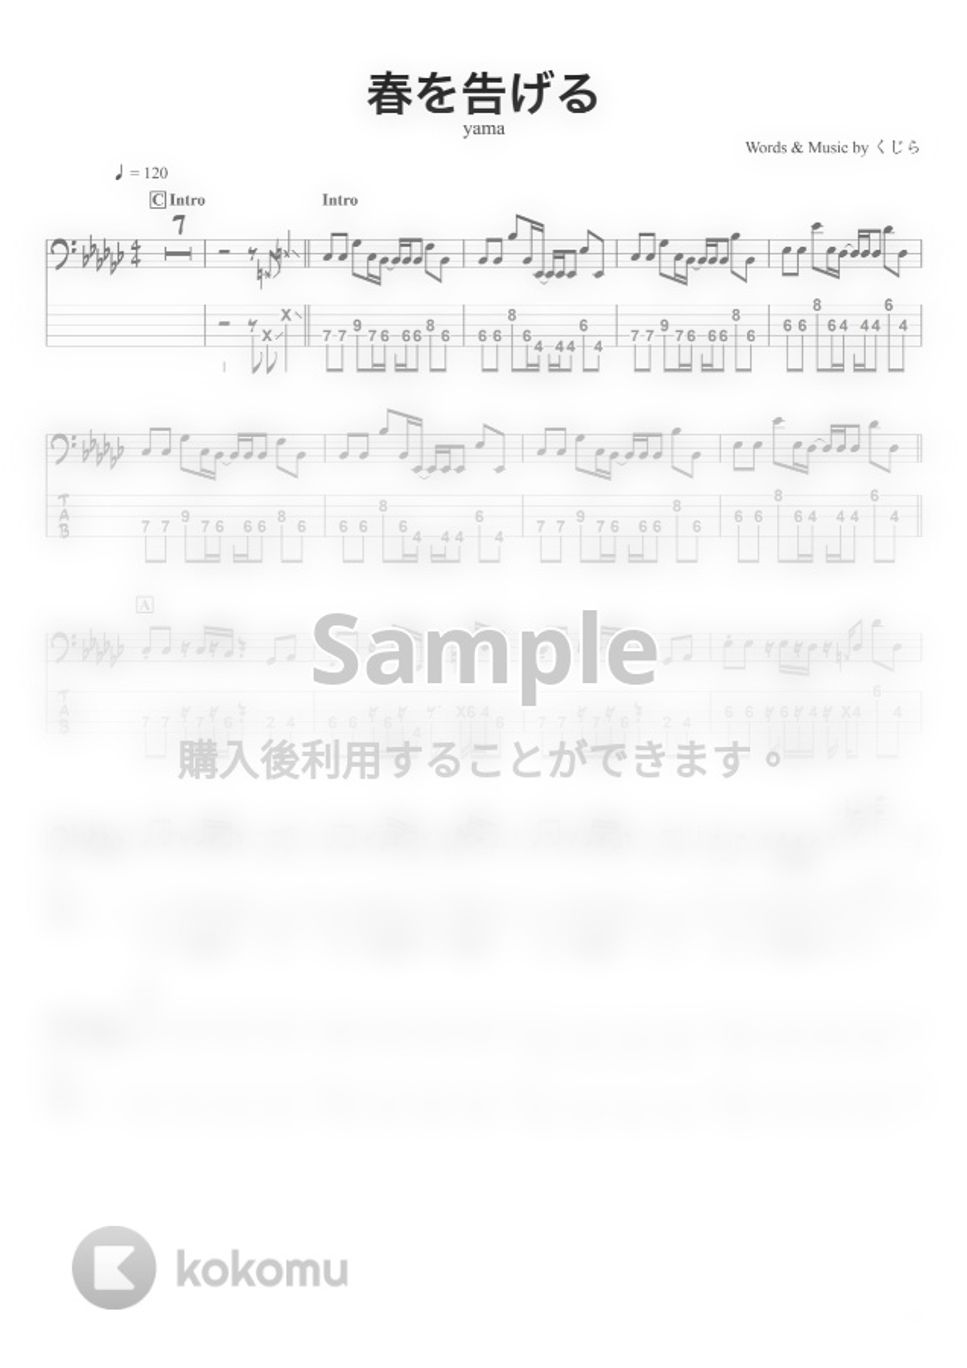 yama - 春を告げる (ベースTAB譜 / ☆5弦ベース対応) by swbass